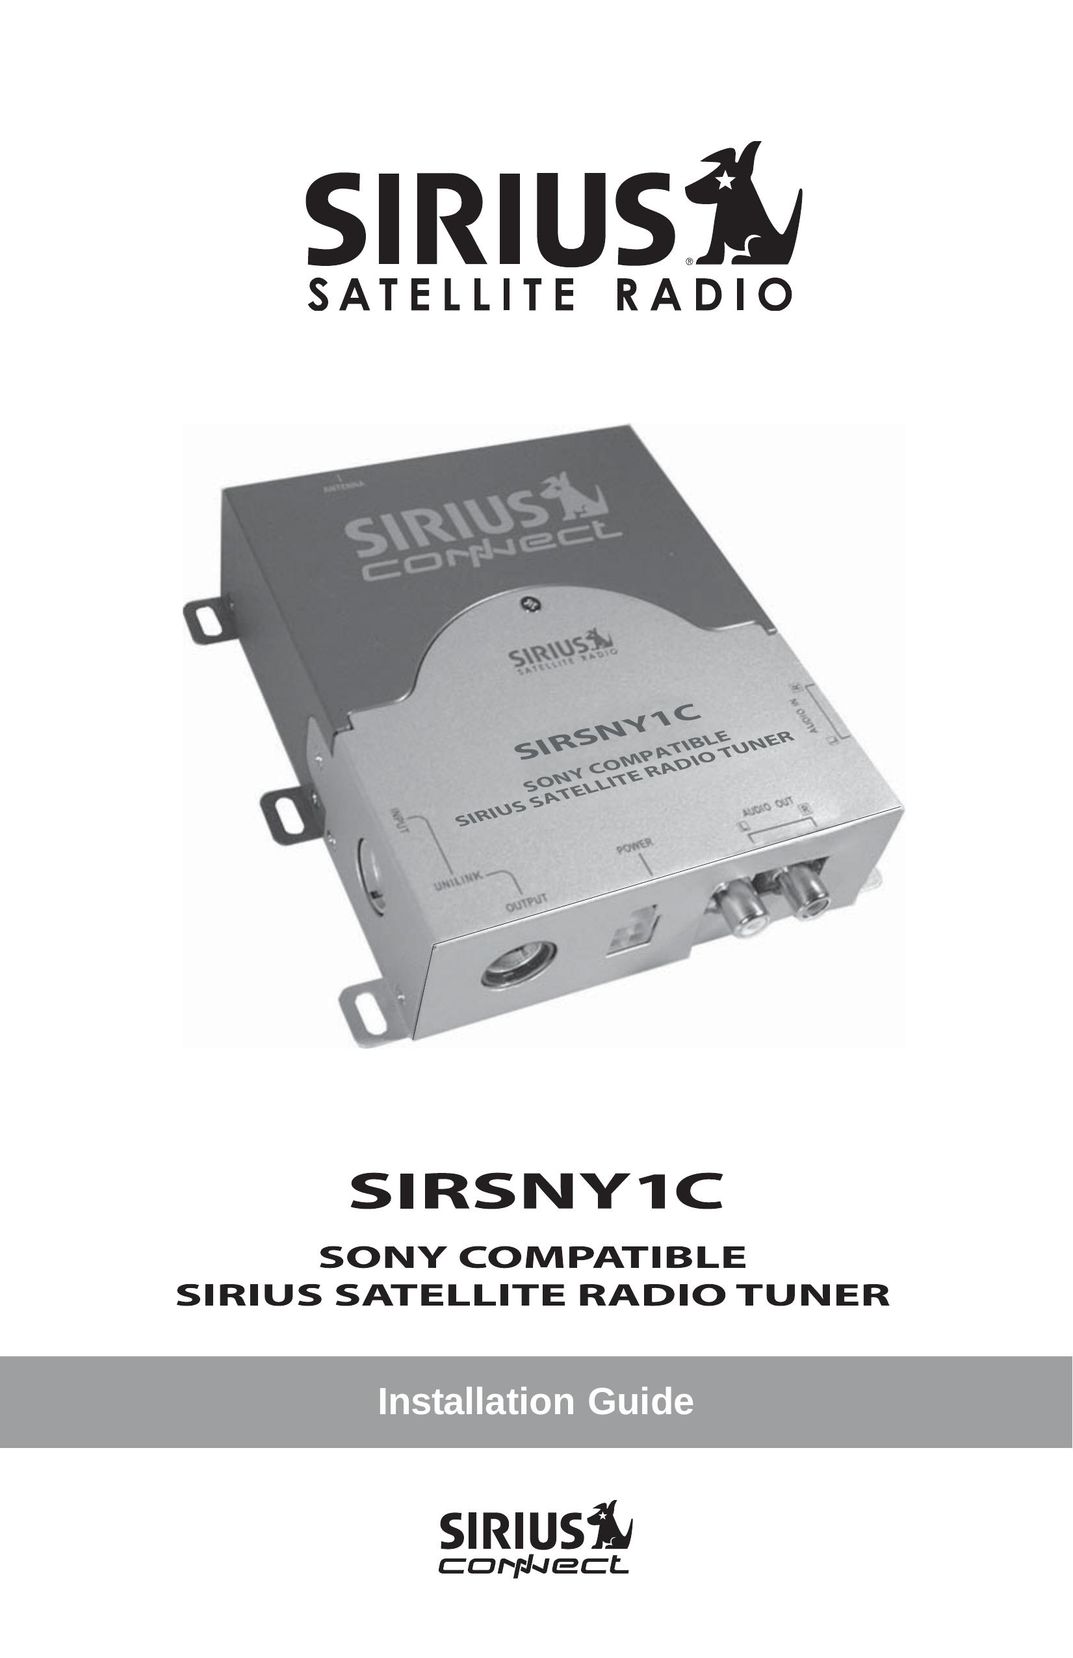 Sirius Satellite Radio SIRSNY1C Portable Radio User Manual